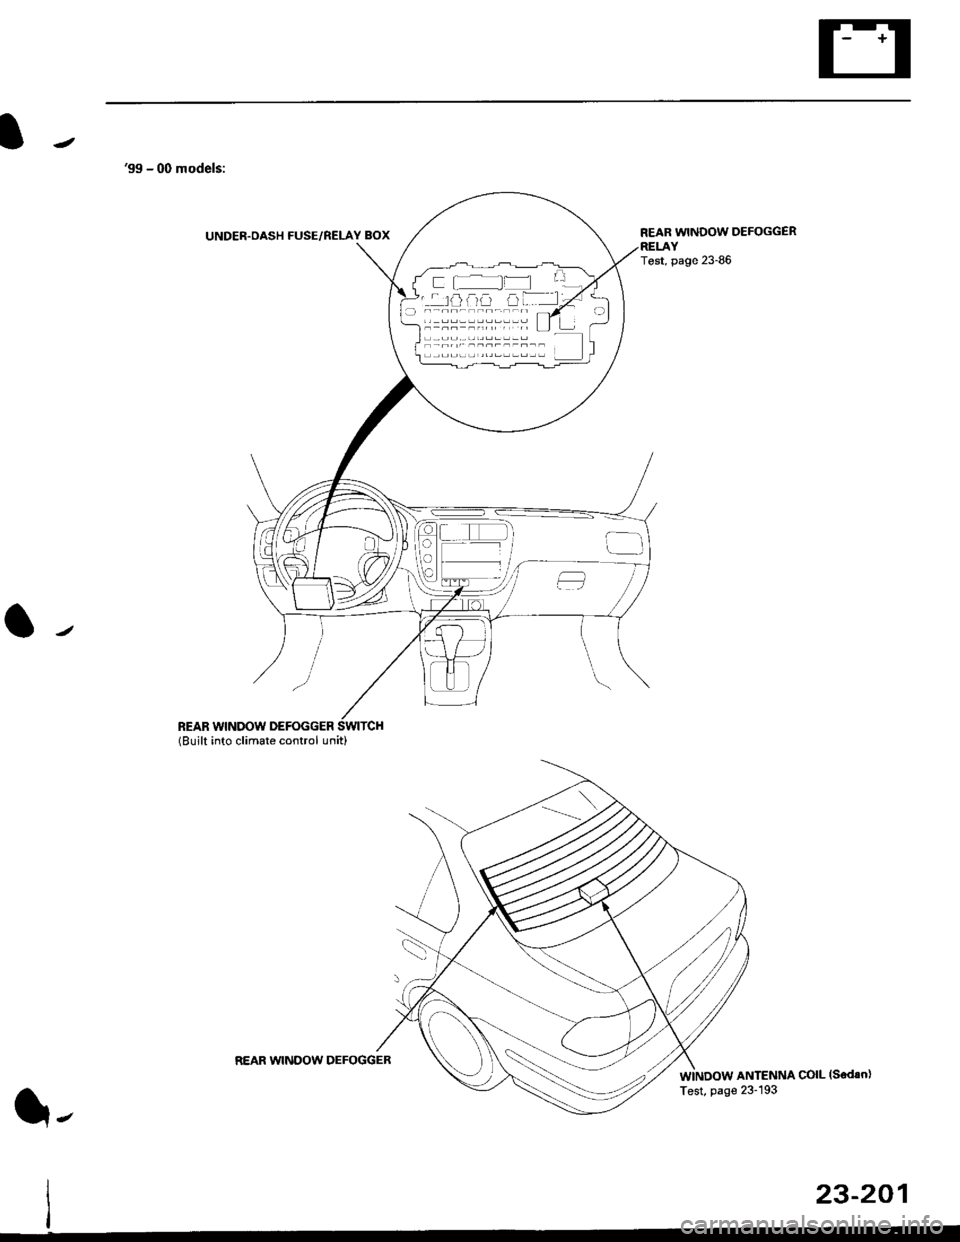 HONDA CIVIC 1998 6.G Workshop Manual 99 - 00 models:
UNDER.OASH FUSE/RELAY BOX
REAR WINDOW DEFOGGER(Built into climate control unit)
REAR WINDOW DEFOGGER
Test, page 23-86
ANTENNA COIL (Sedsn)
f l_ f= L
rofia trF.-lj
l-
REAR WINDOW DE